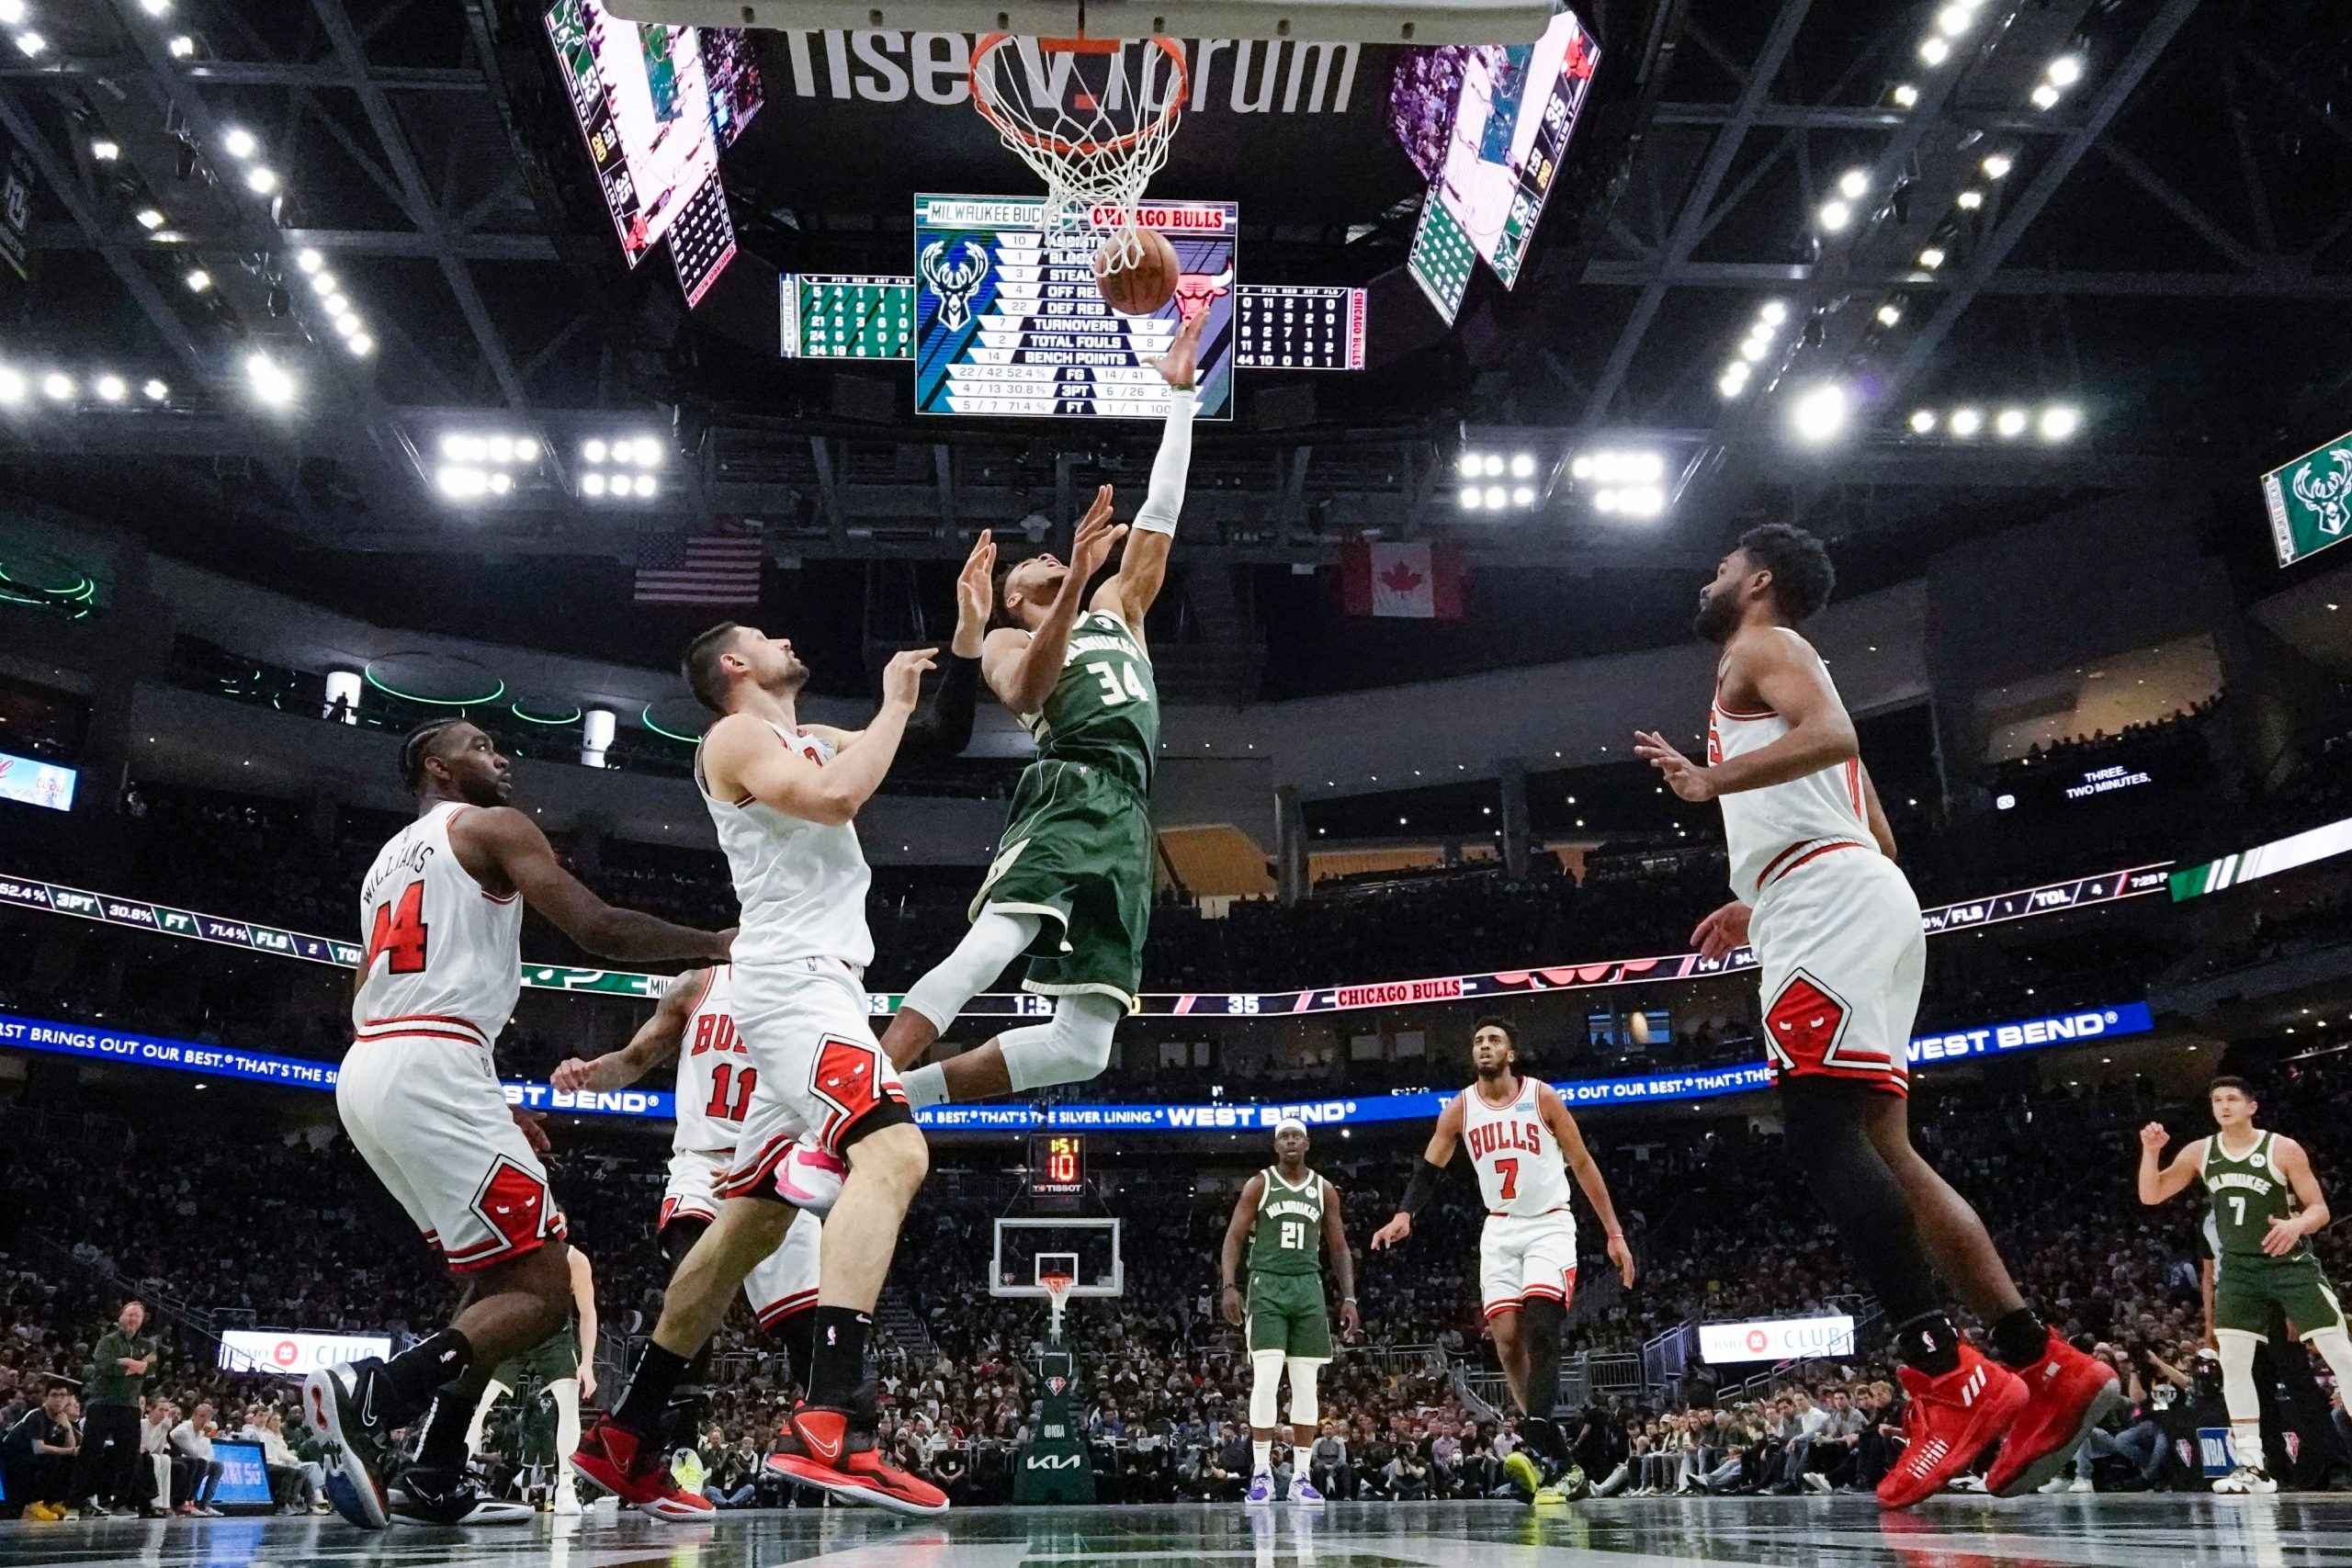 NBA: Bucks seal Playoffs vs Bulls, reach Eastern conference semifinals